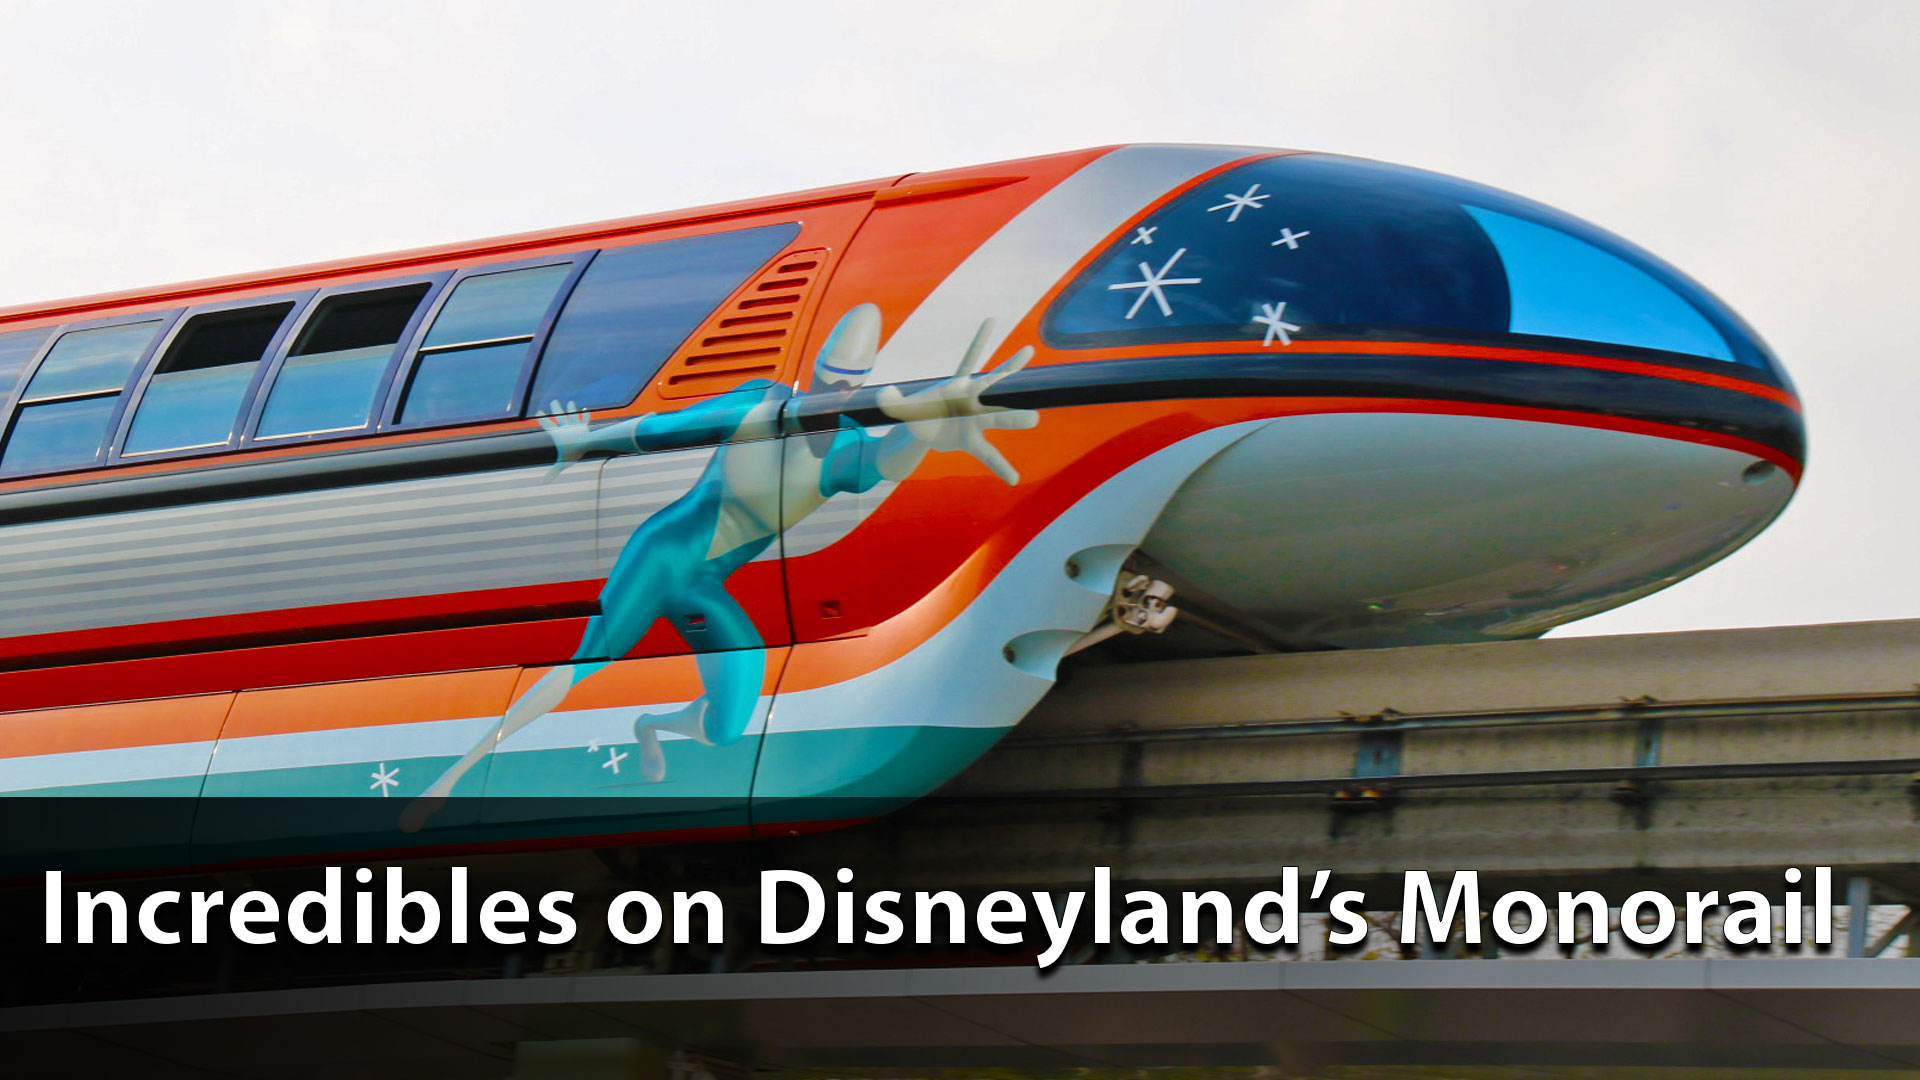 The Incredibles on Disneyland’s Monorail Ahead of Pixar Fest!